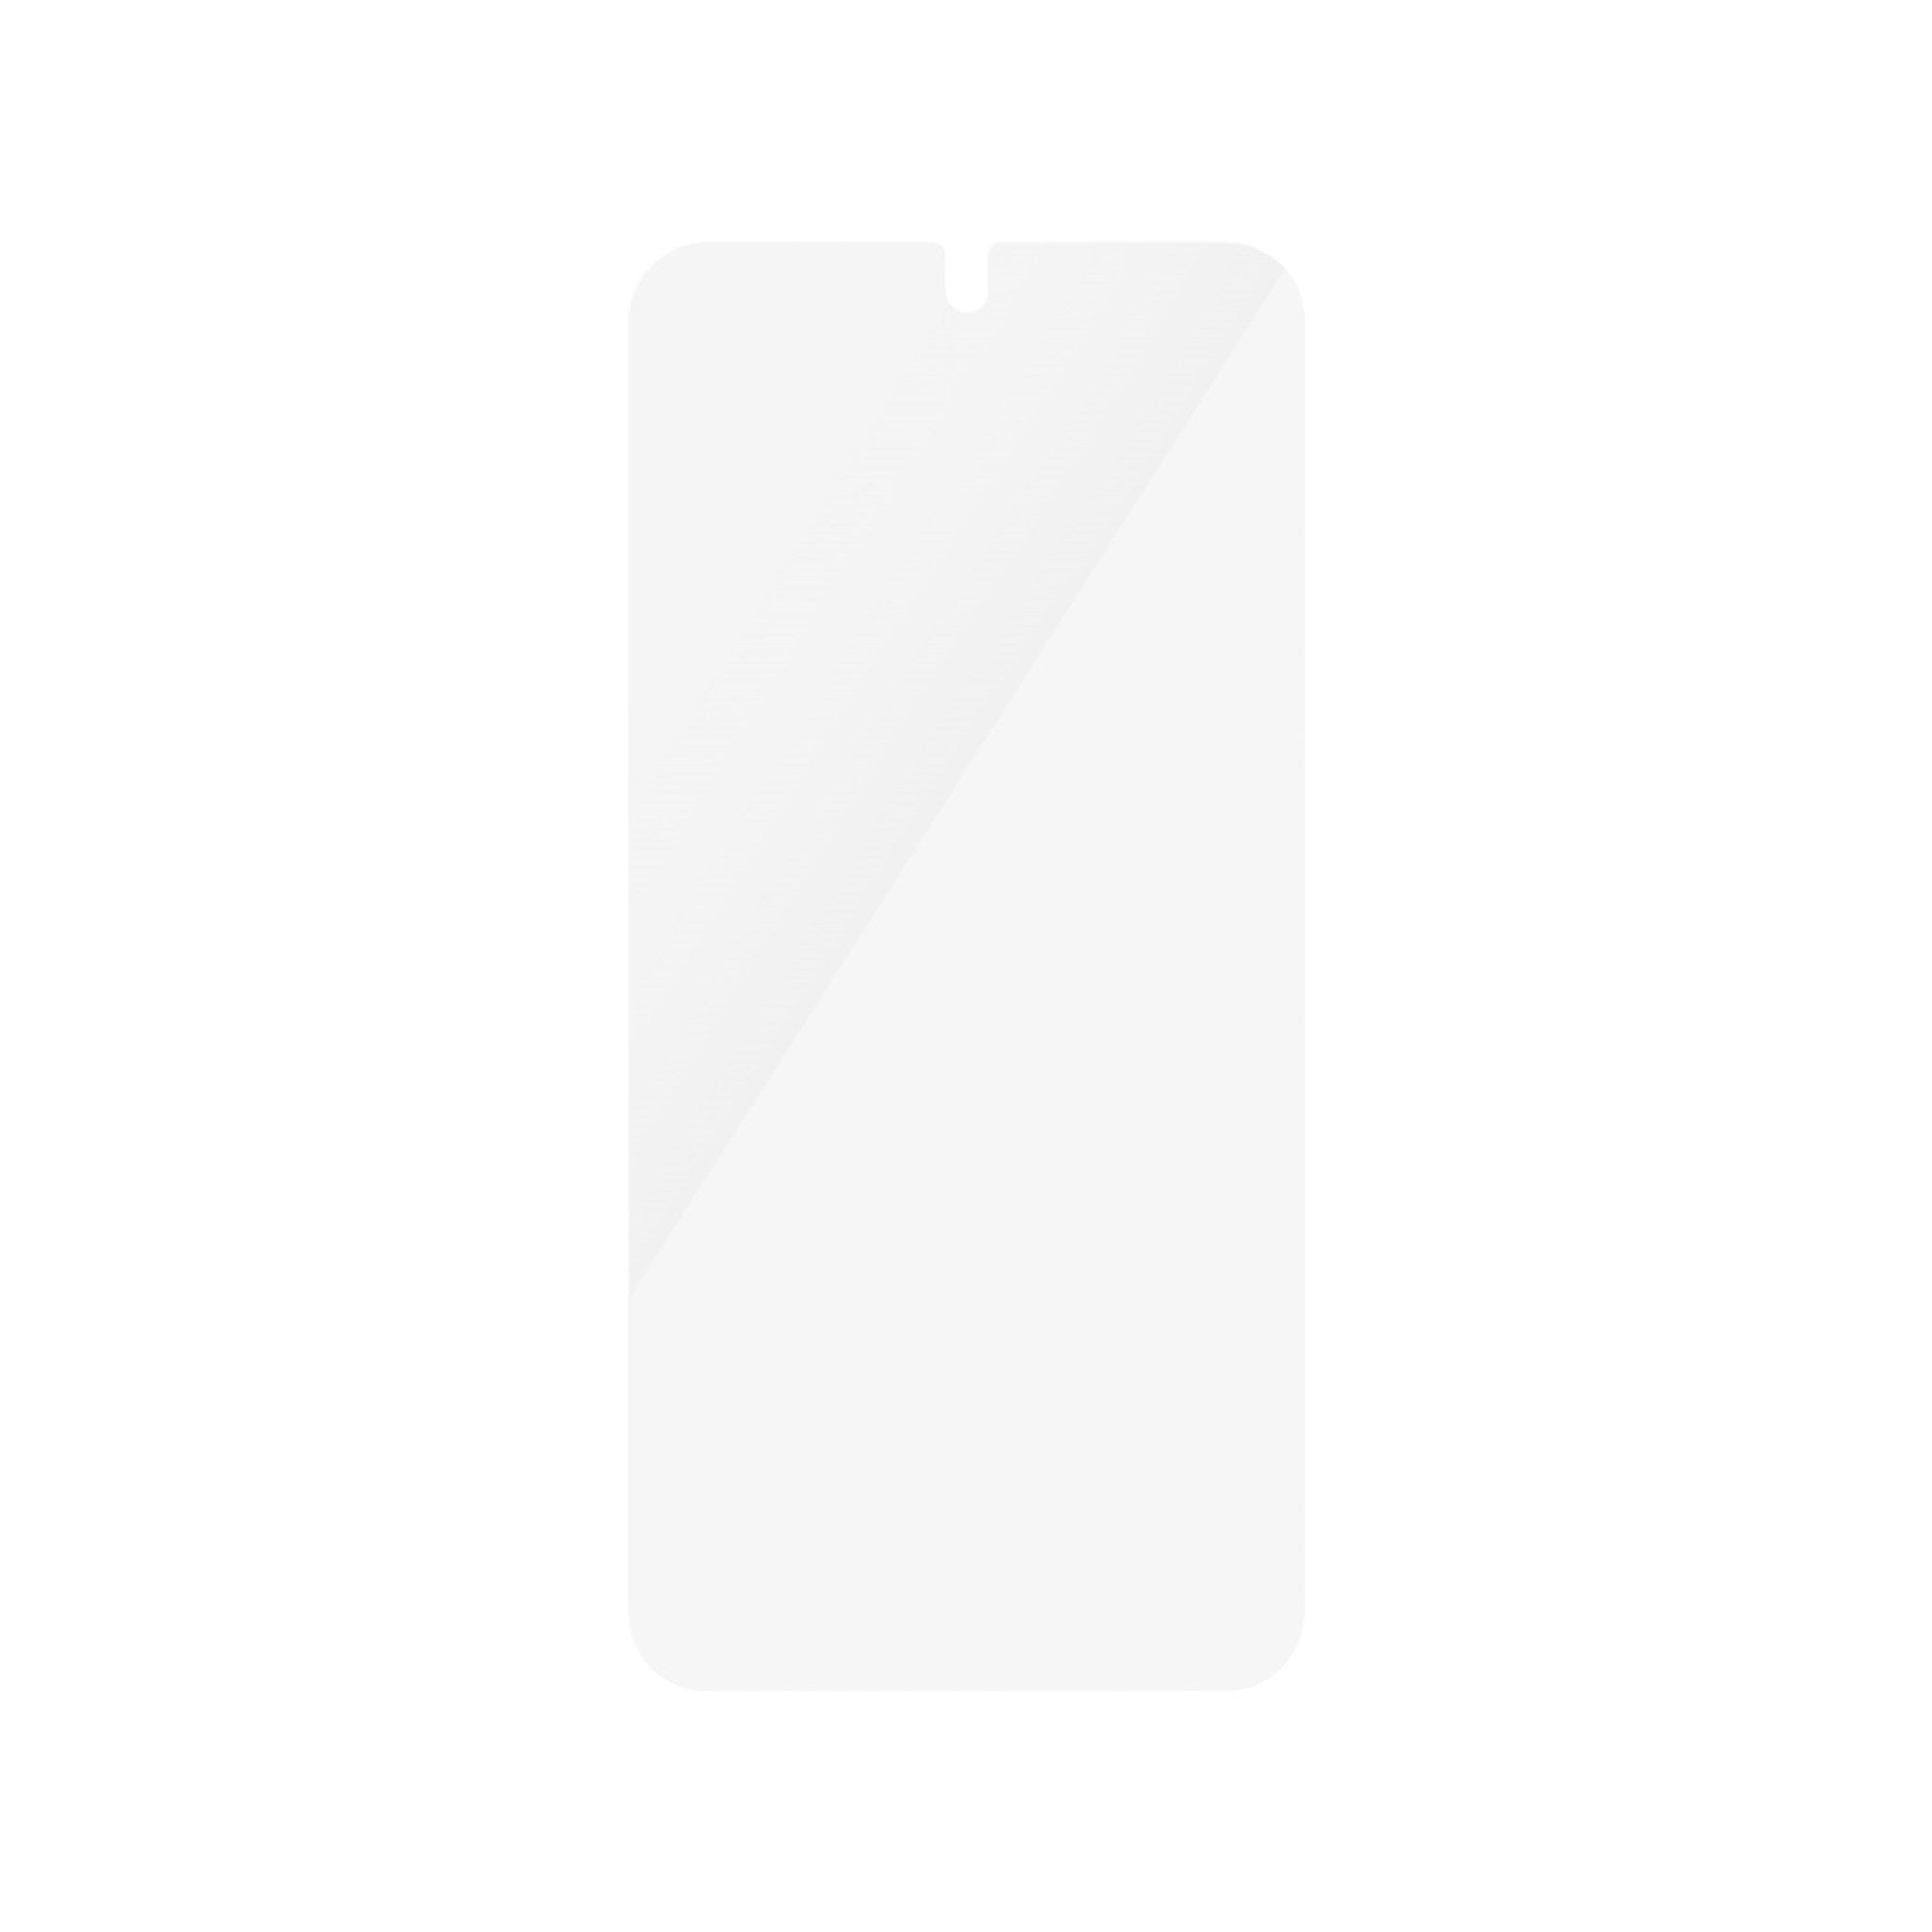 PANZERGLASS Ultra-wide Fit Displayschutz(für Galaxy Samsung A54 5G)